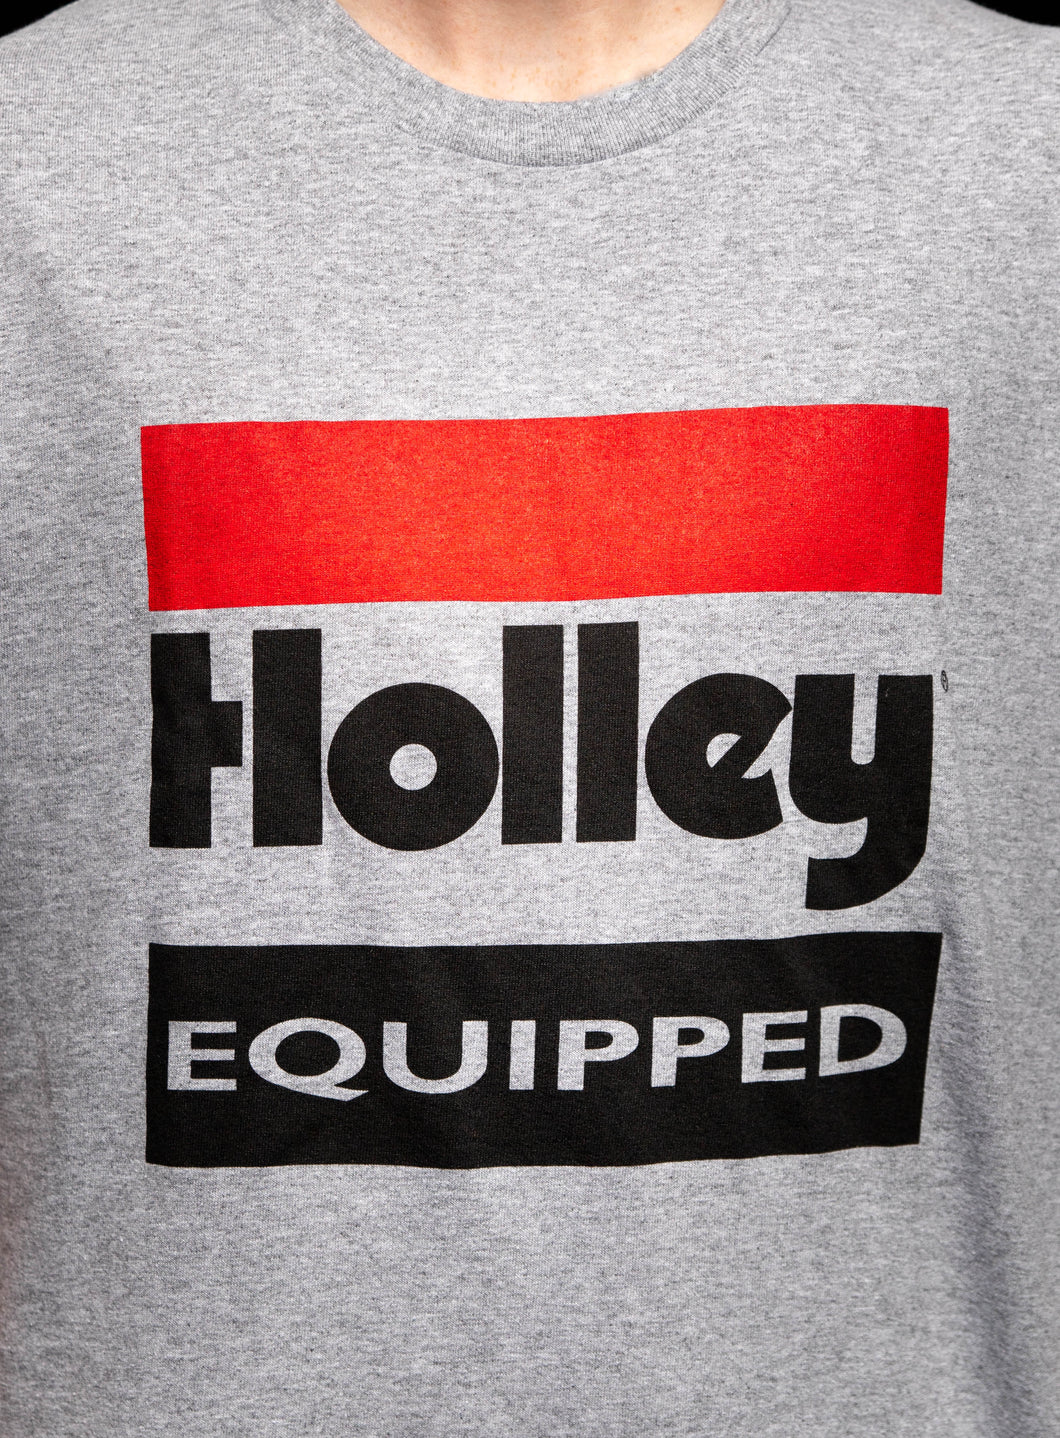 Holley equipped racing tshirt shirt gildan farmtruck and azn 405 okc 